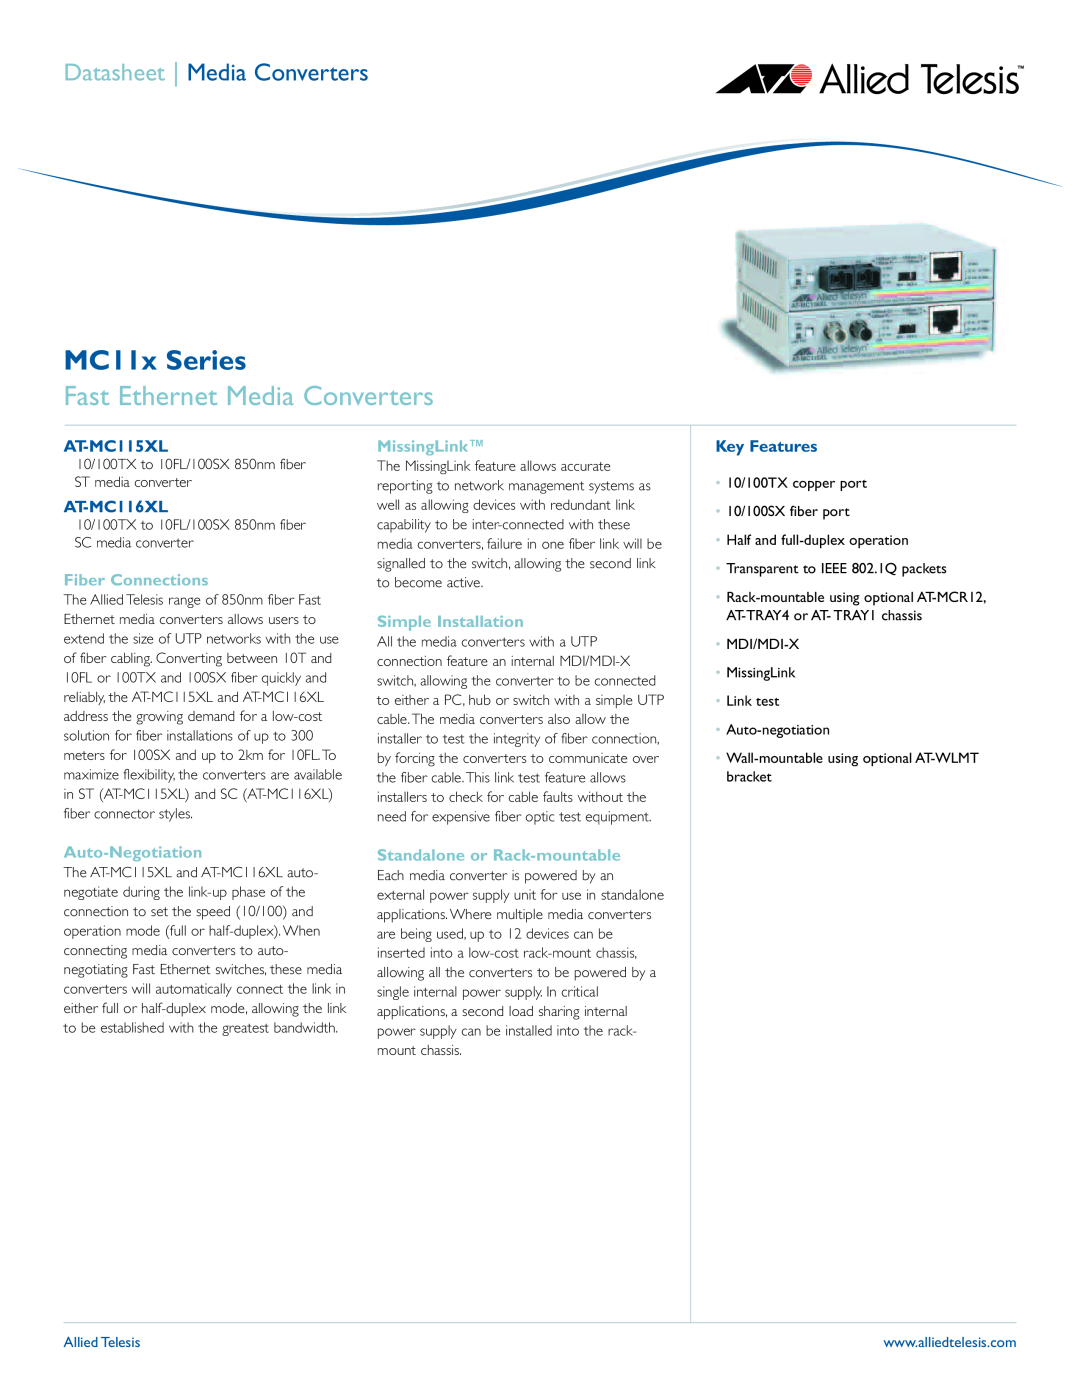 Allied Telesis AT-MC110 Series manual Fast Ethernet Media Converters, AT-MC115XL, AT-MC116XL, Fiber Connections 